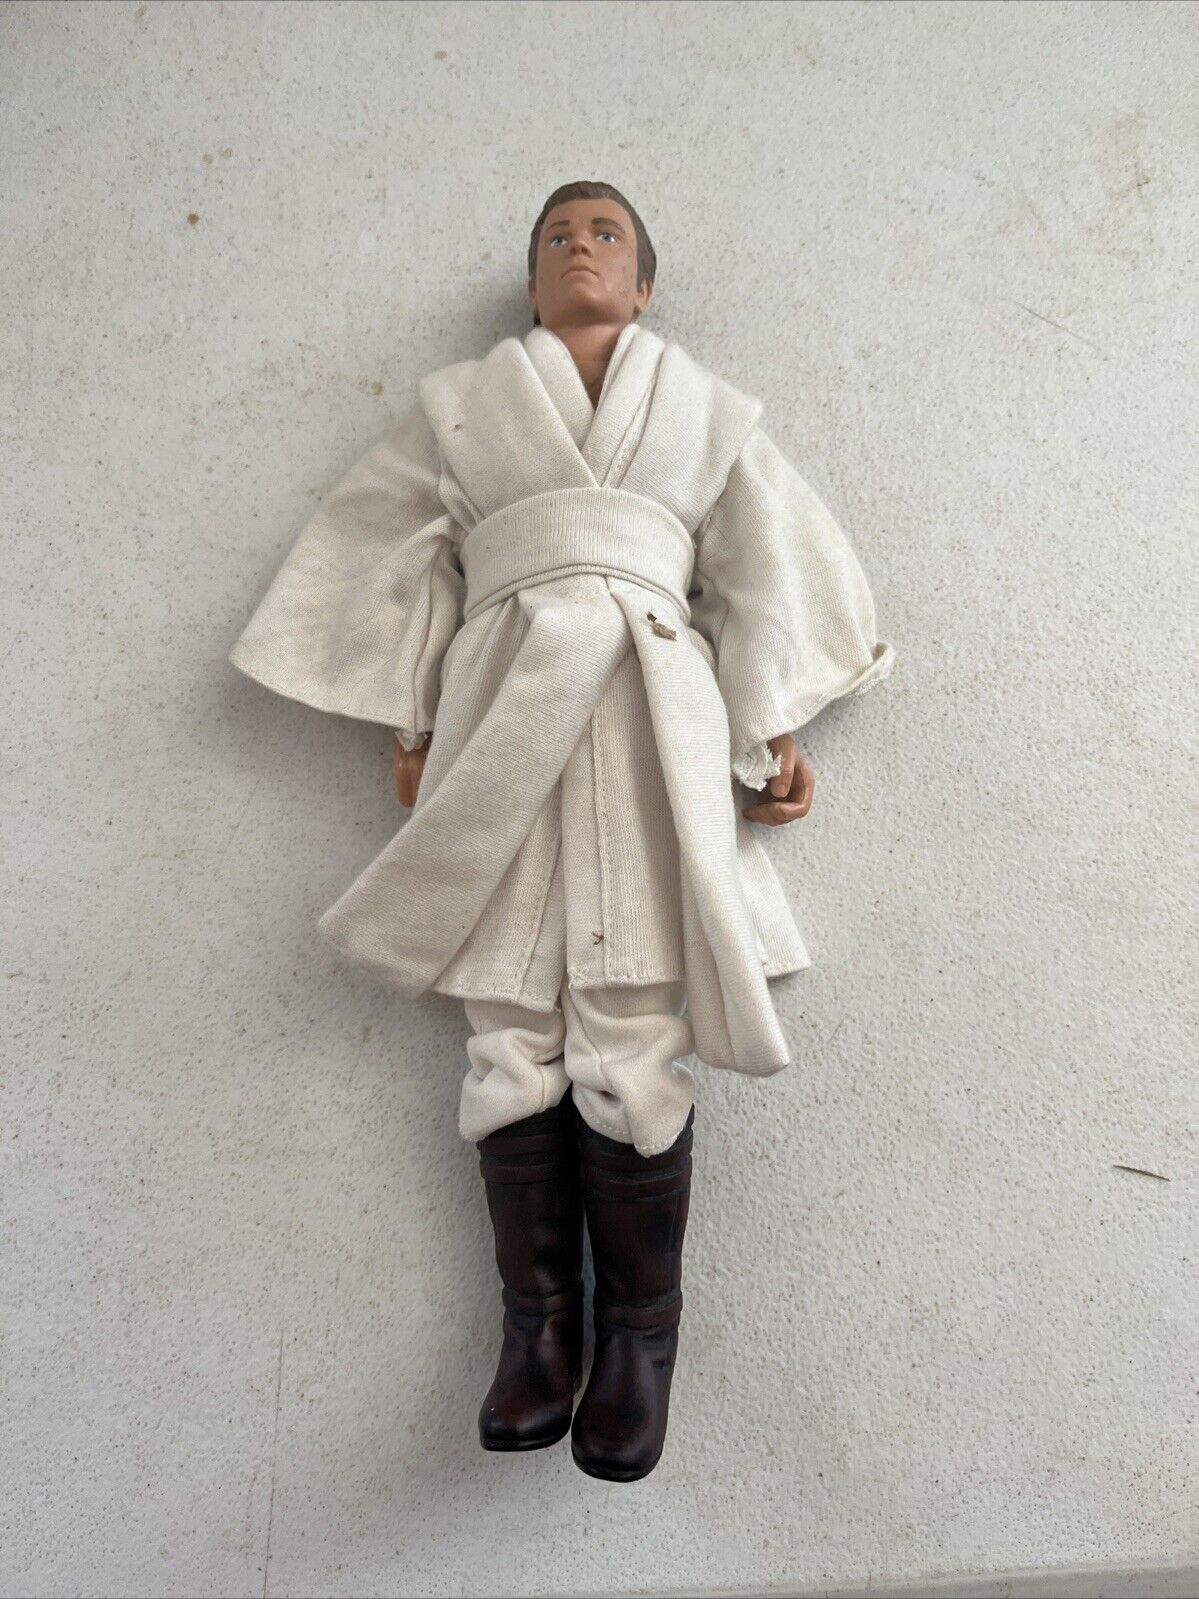 Interesting Hasbro Star Wars Obi Wan Kenobi Padawan 12″ Inch Action Figure 1998 on eBay